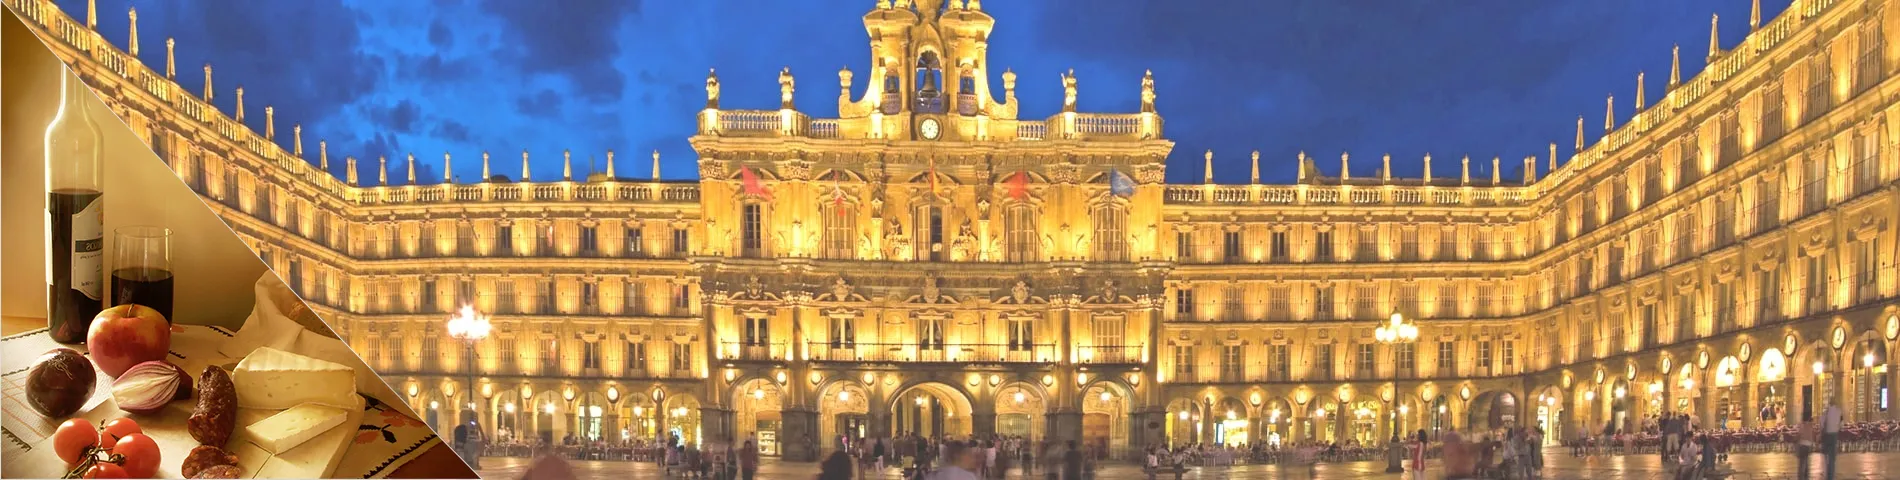 Salamanca - Espanhol & Cultura 